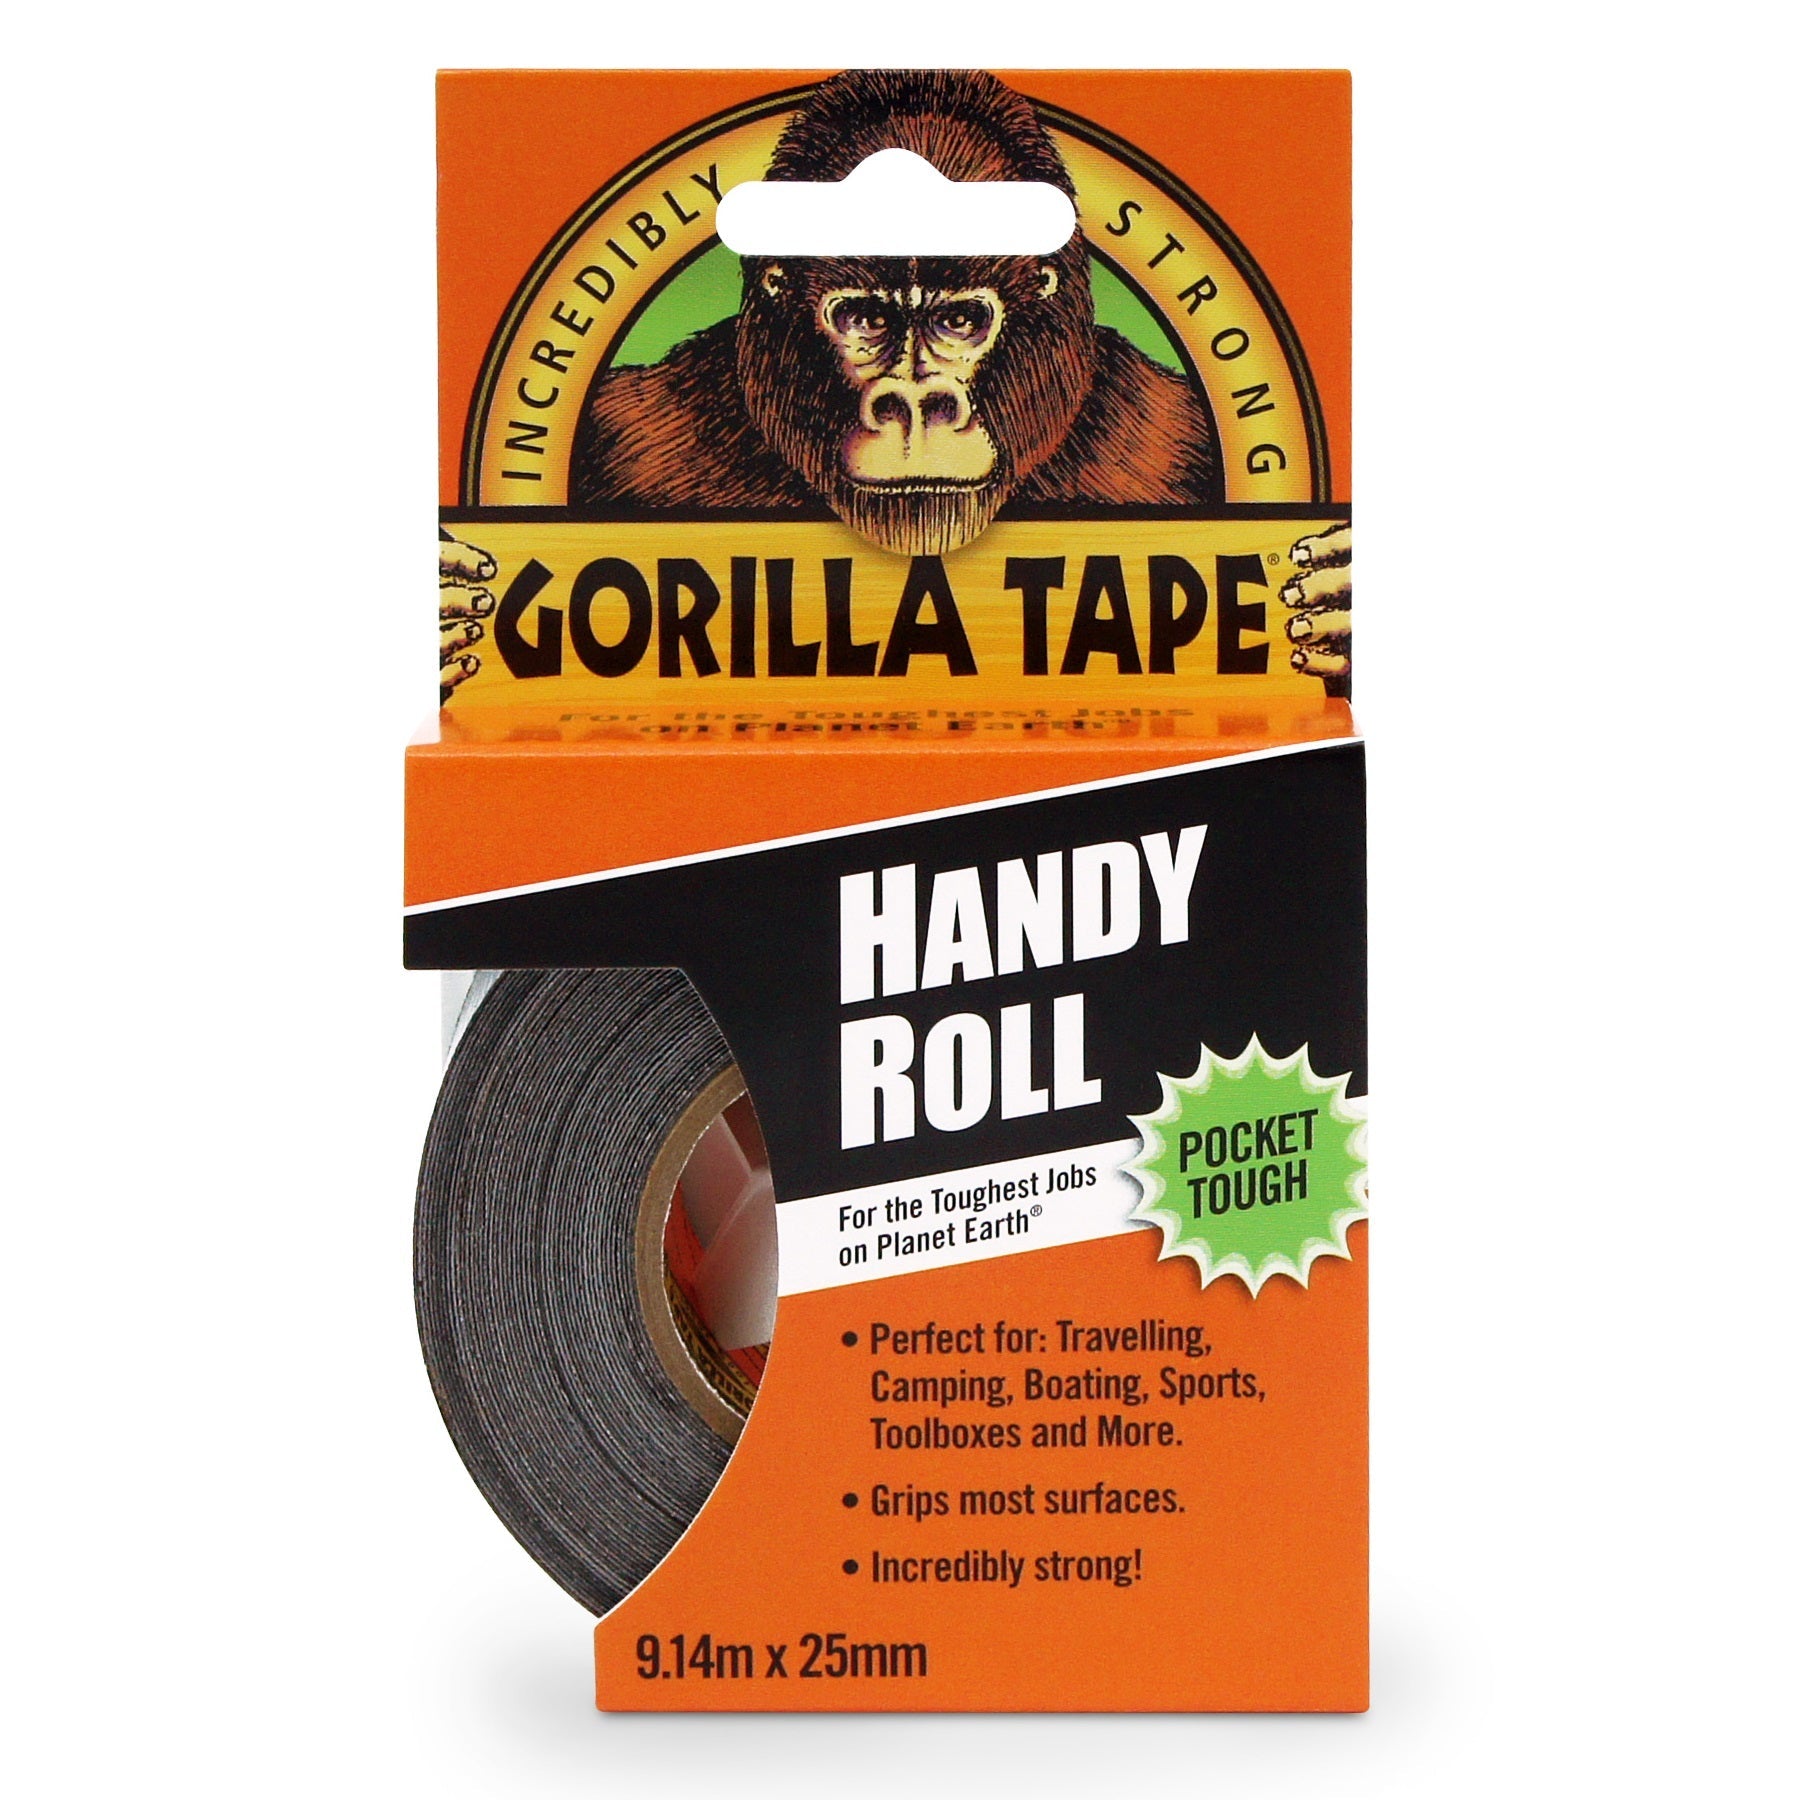 Gorilla Tape 3044401 Pocket Tough Handy Roll 9.14Mtr x 25mm - Premium All Purpose Tape from Gorilla Glue - Just $3.95! Shop now at W Hurst & Son (IW) Ltd